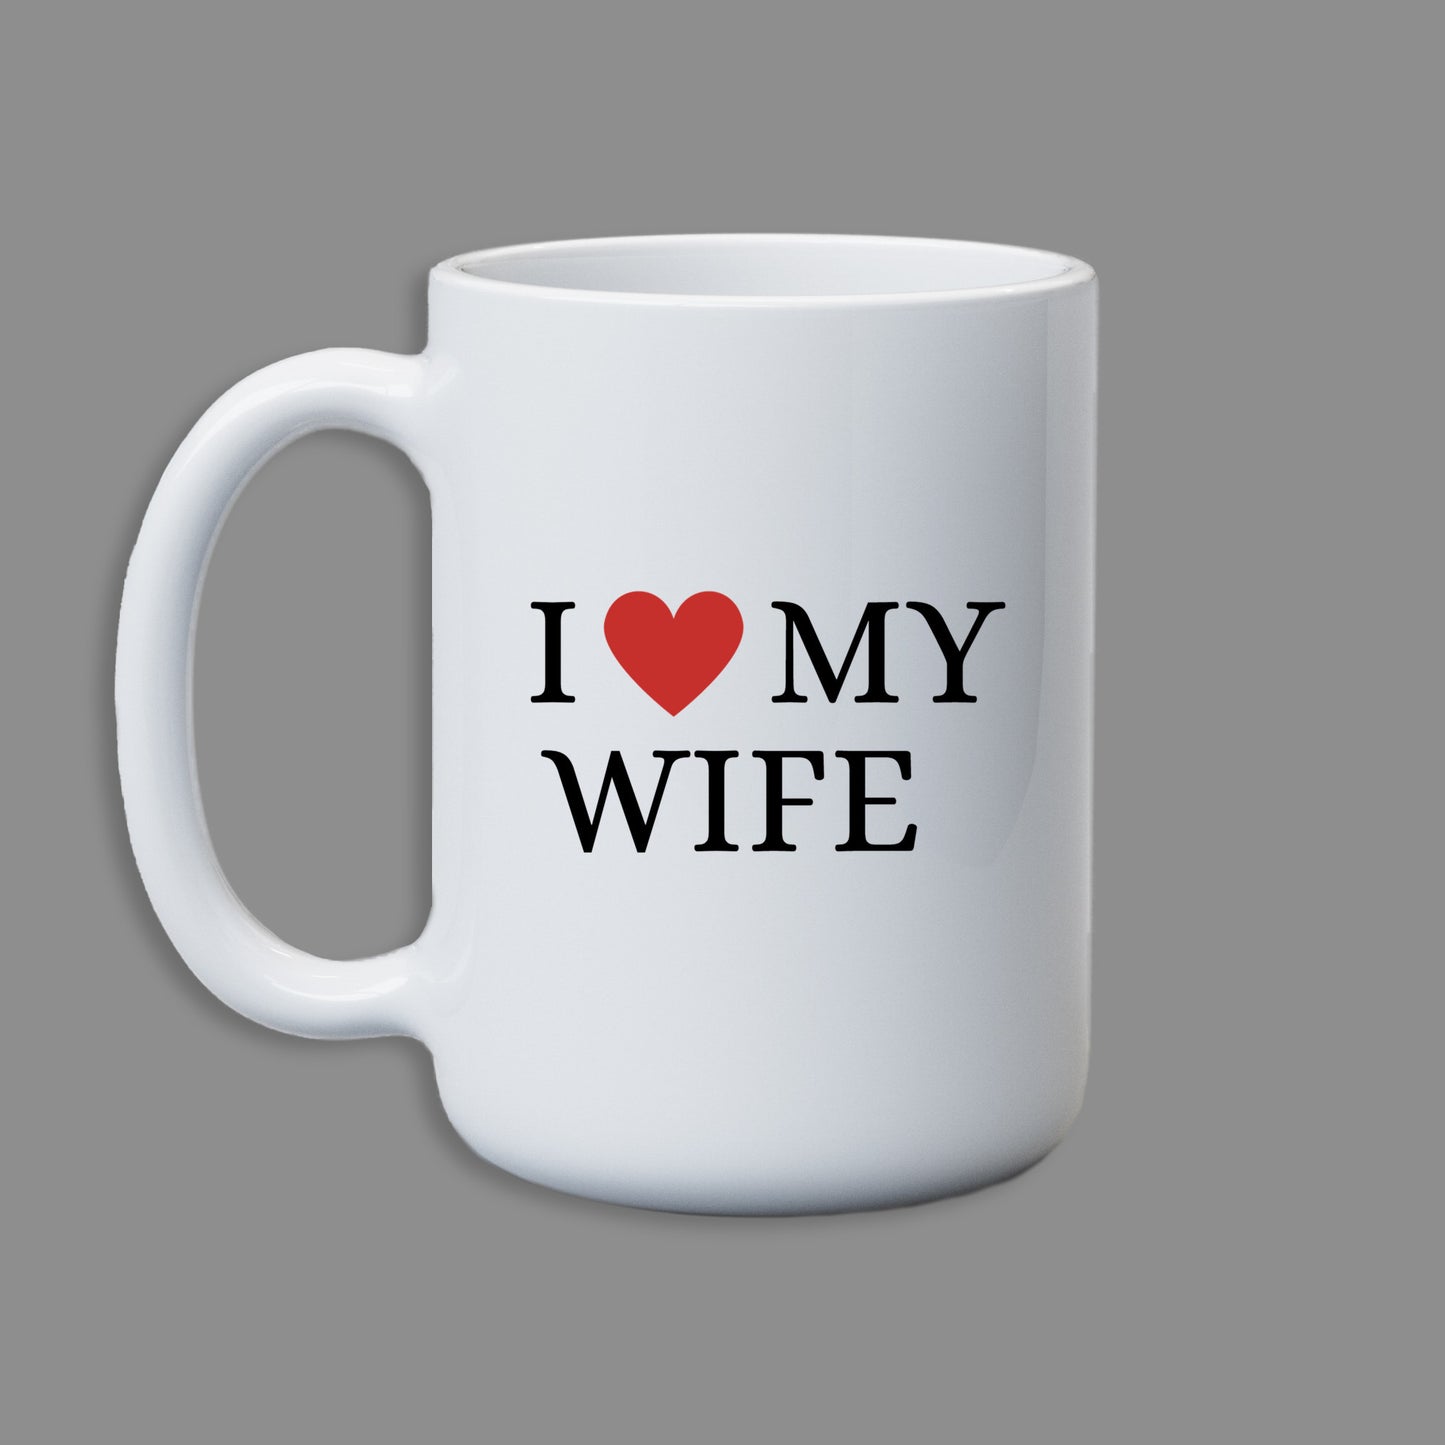 I love my wife, I heart my wife Coffee Mug 15 oz